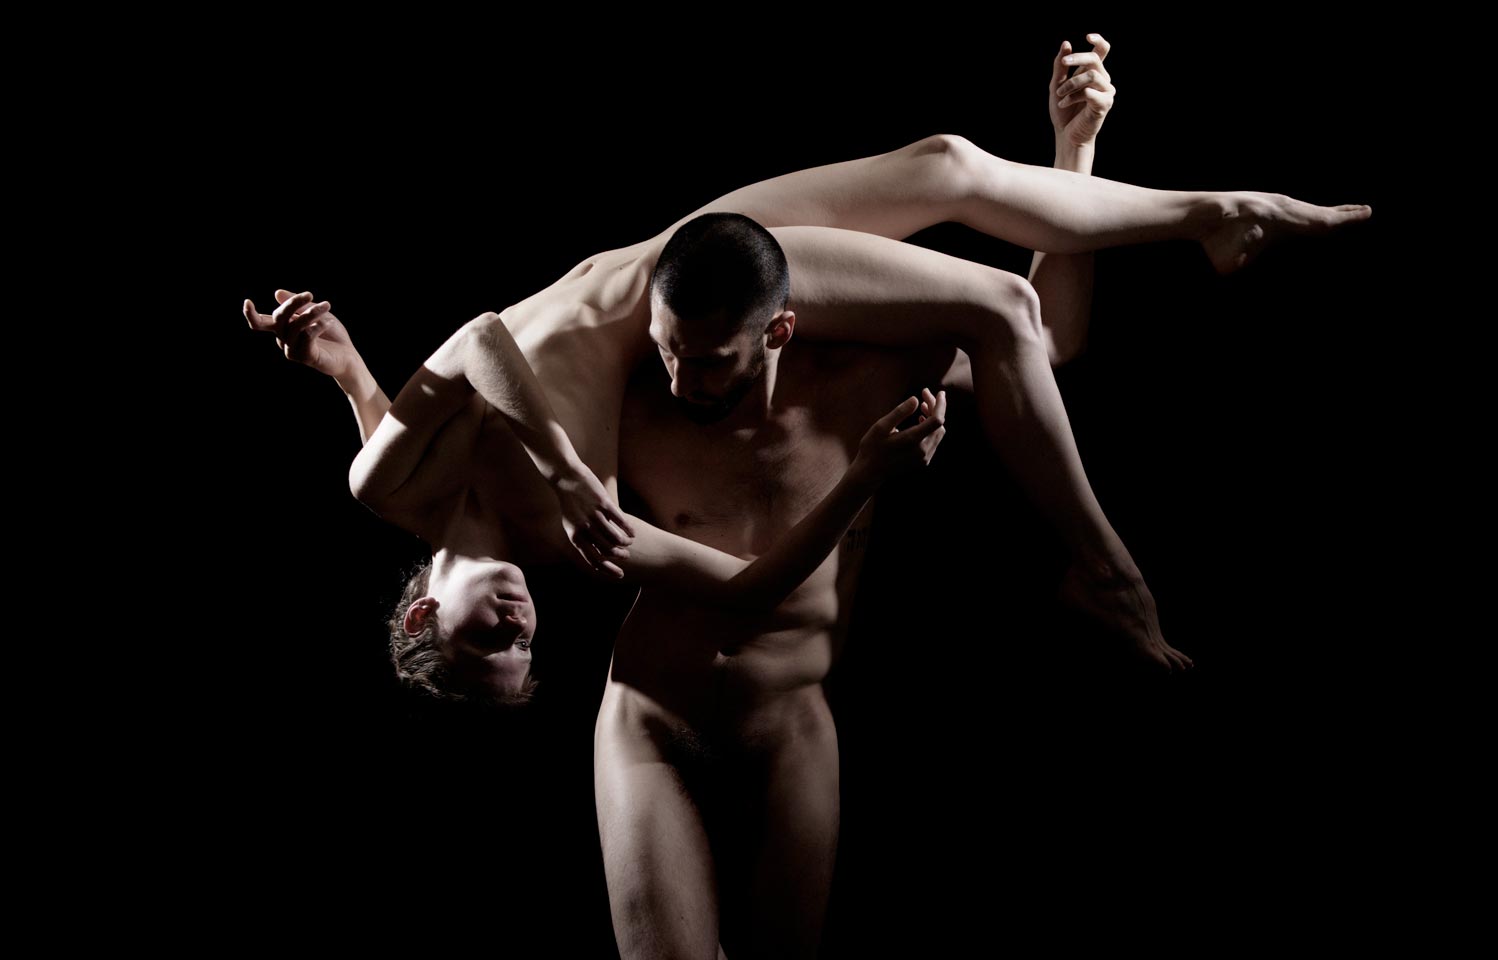 push/FOLD dancer Briley Jozwiak draped over artistic director Samuel Hobbs' shoulders in 'Early' at Columbia Dance Center in Vancouver, Washington| Photographer: Jingzi Zhao